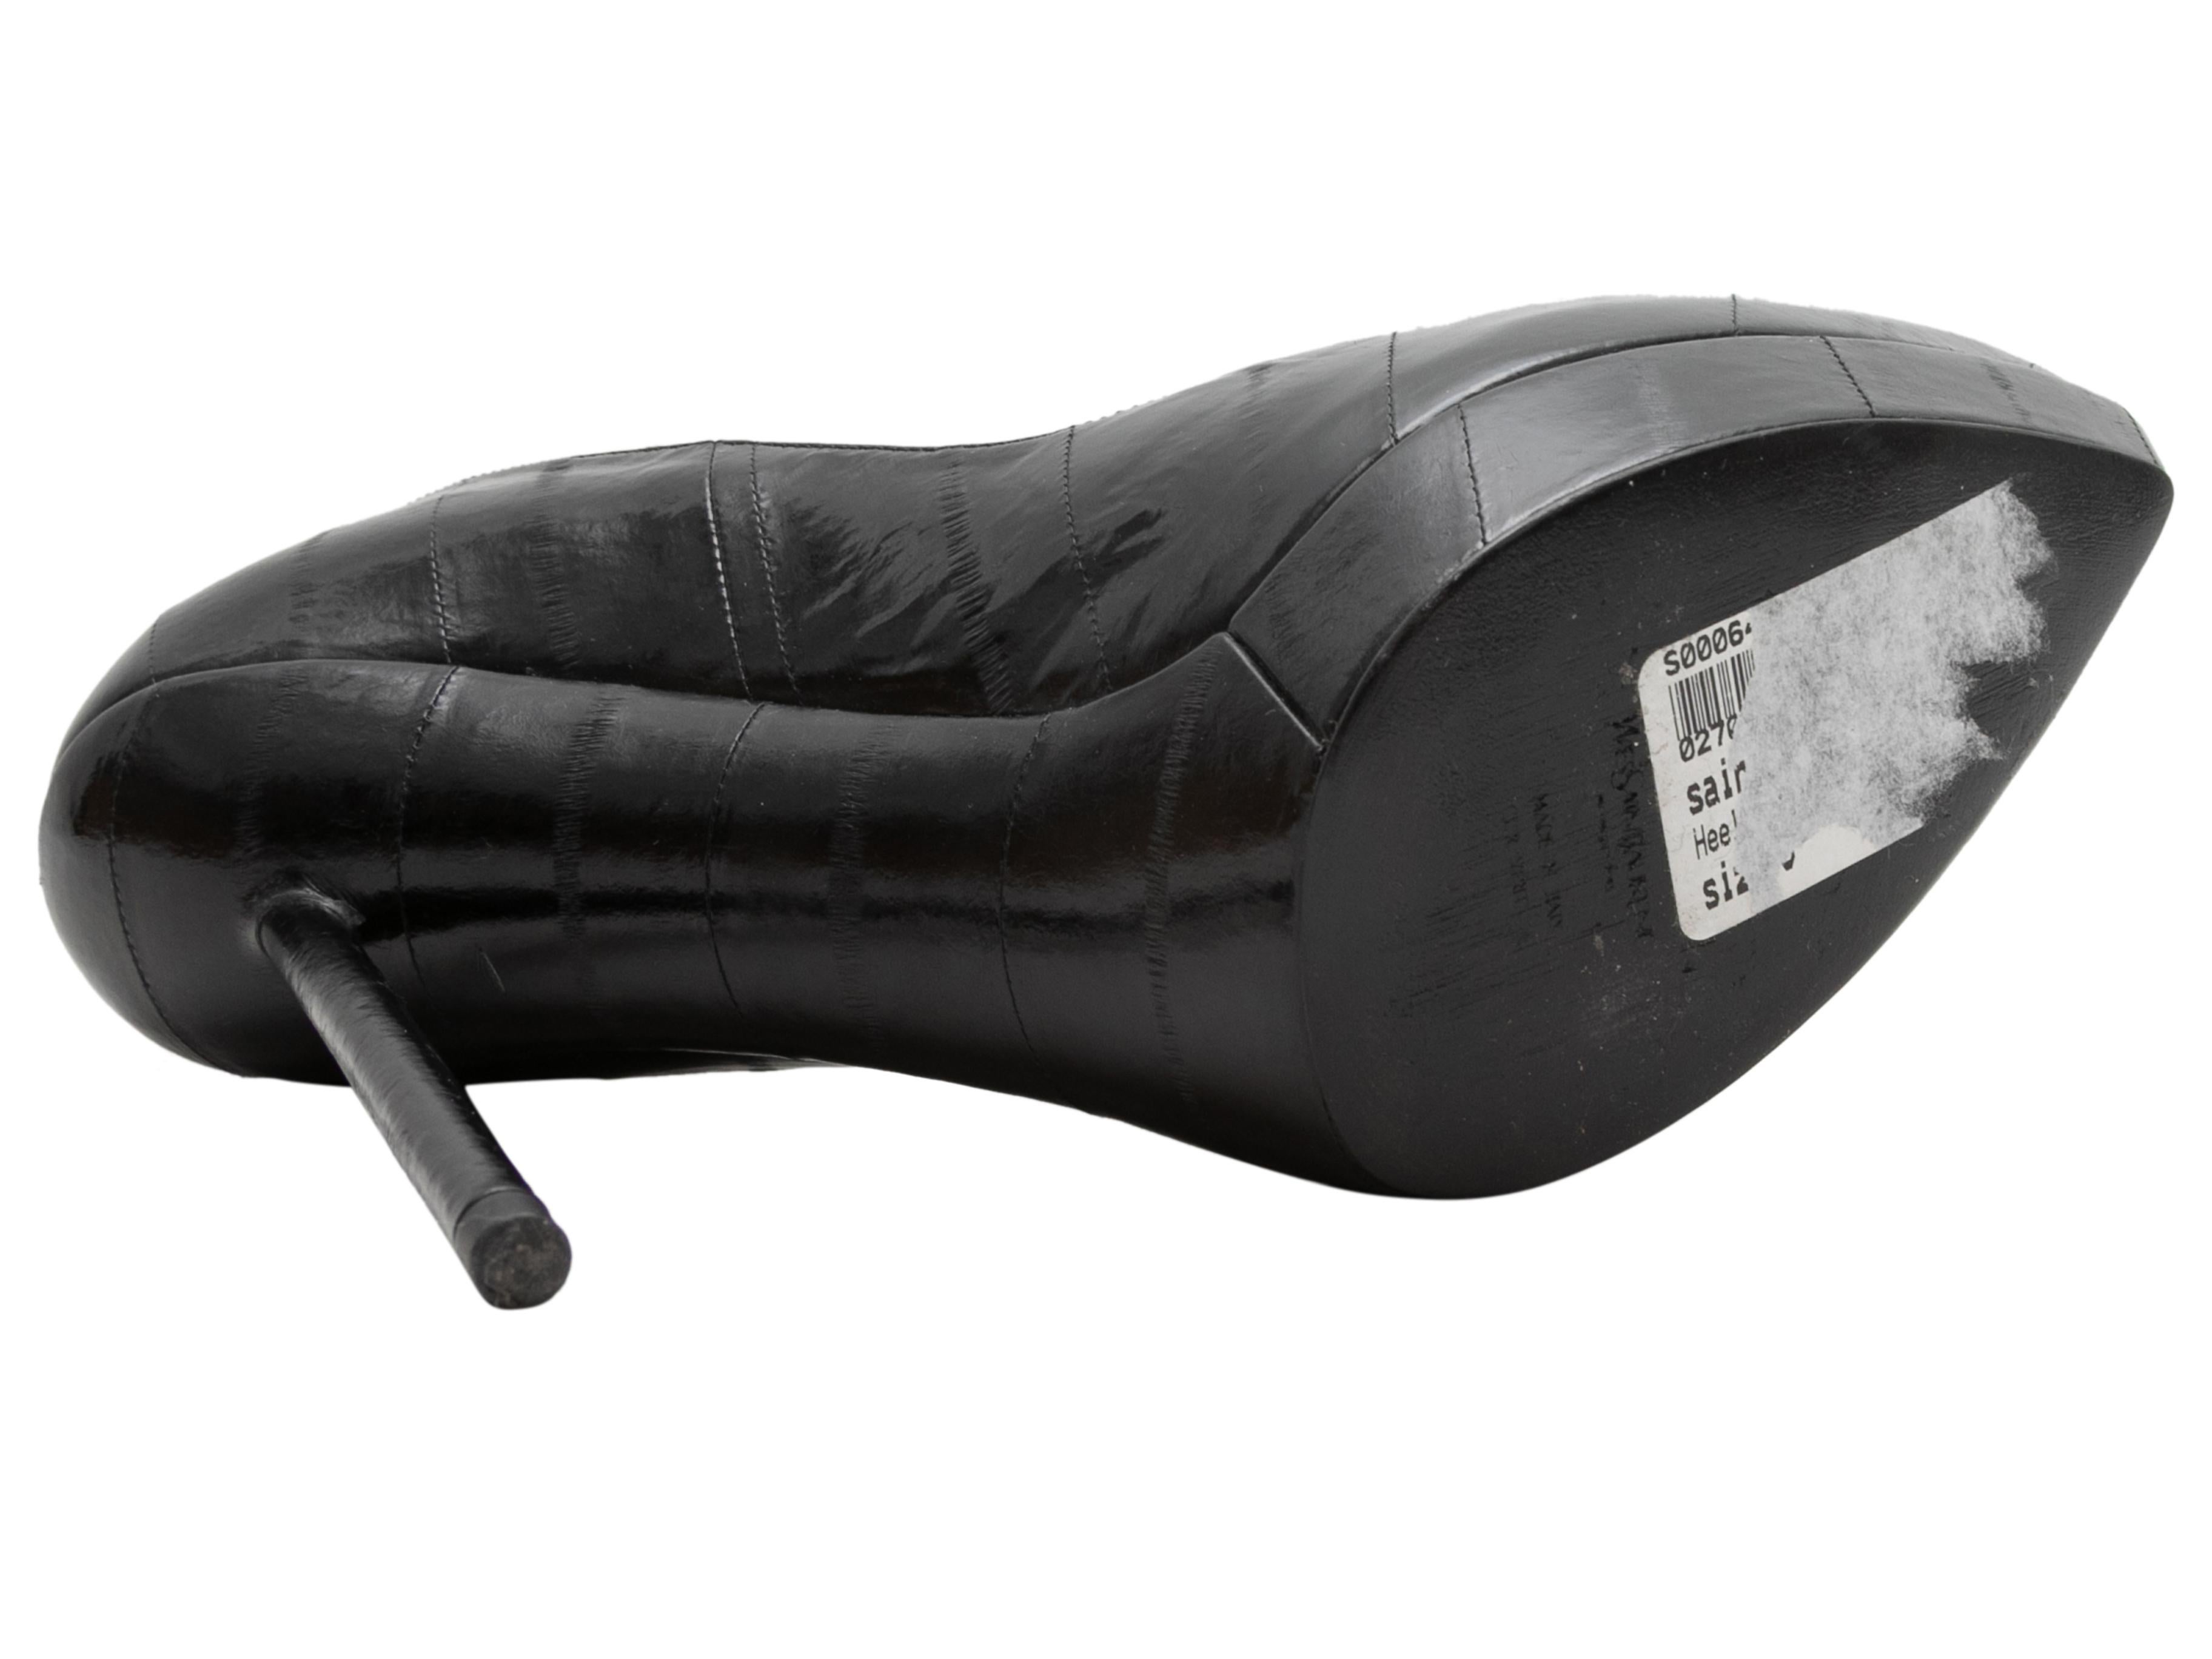 Black embossed croc leather pointed-toe platform pumps by Yves Saint Laurent. 1.5